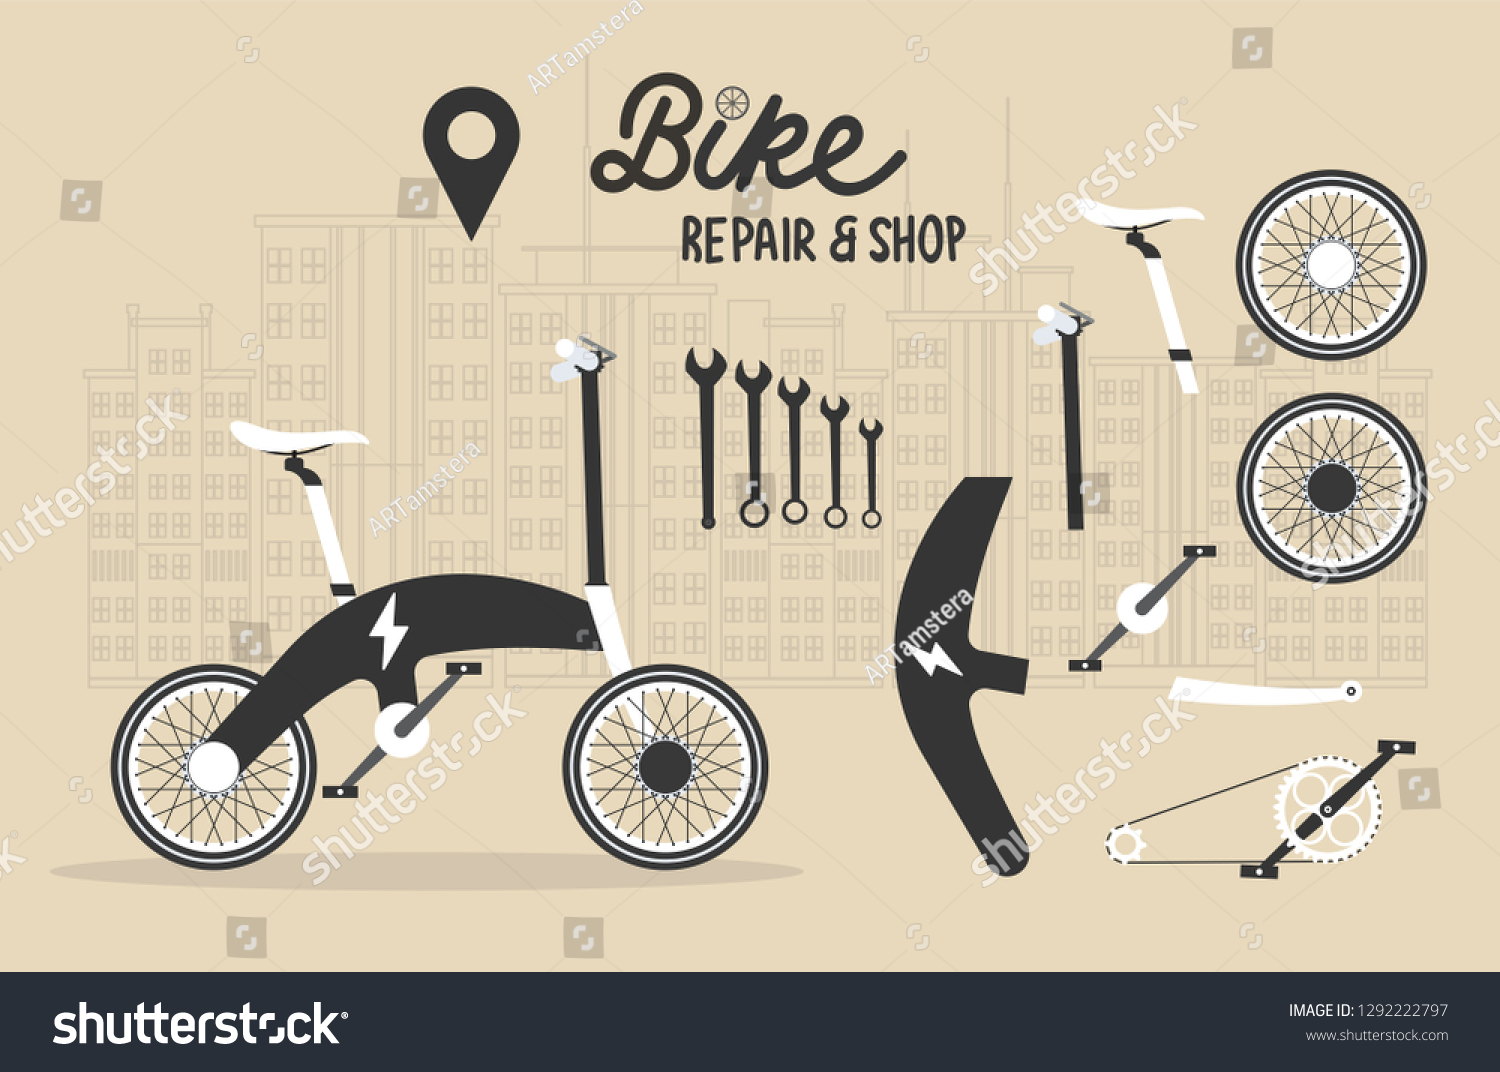 bike shop and repair near me